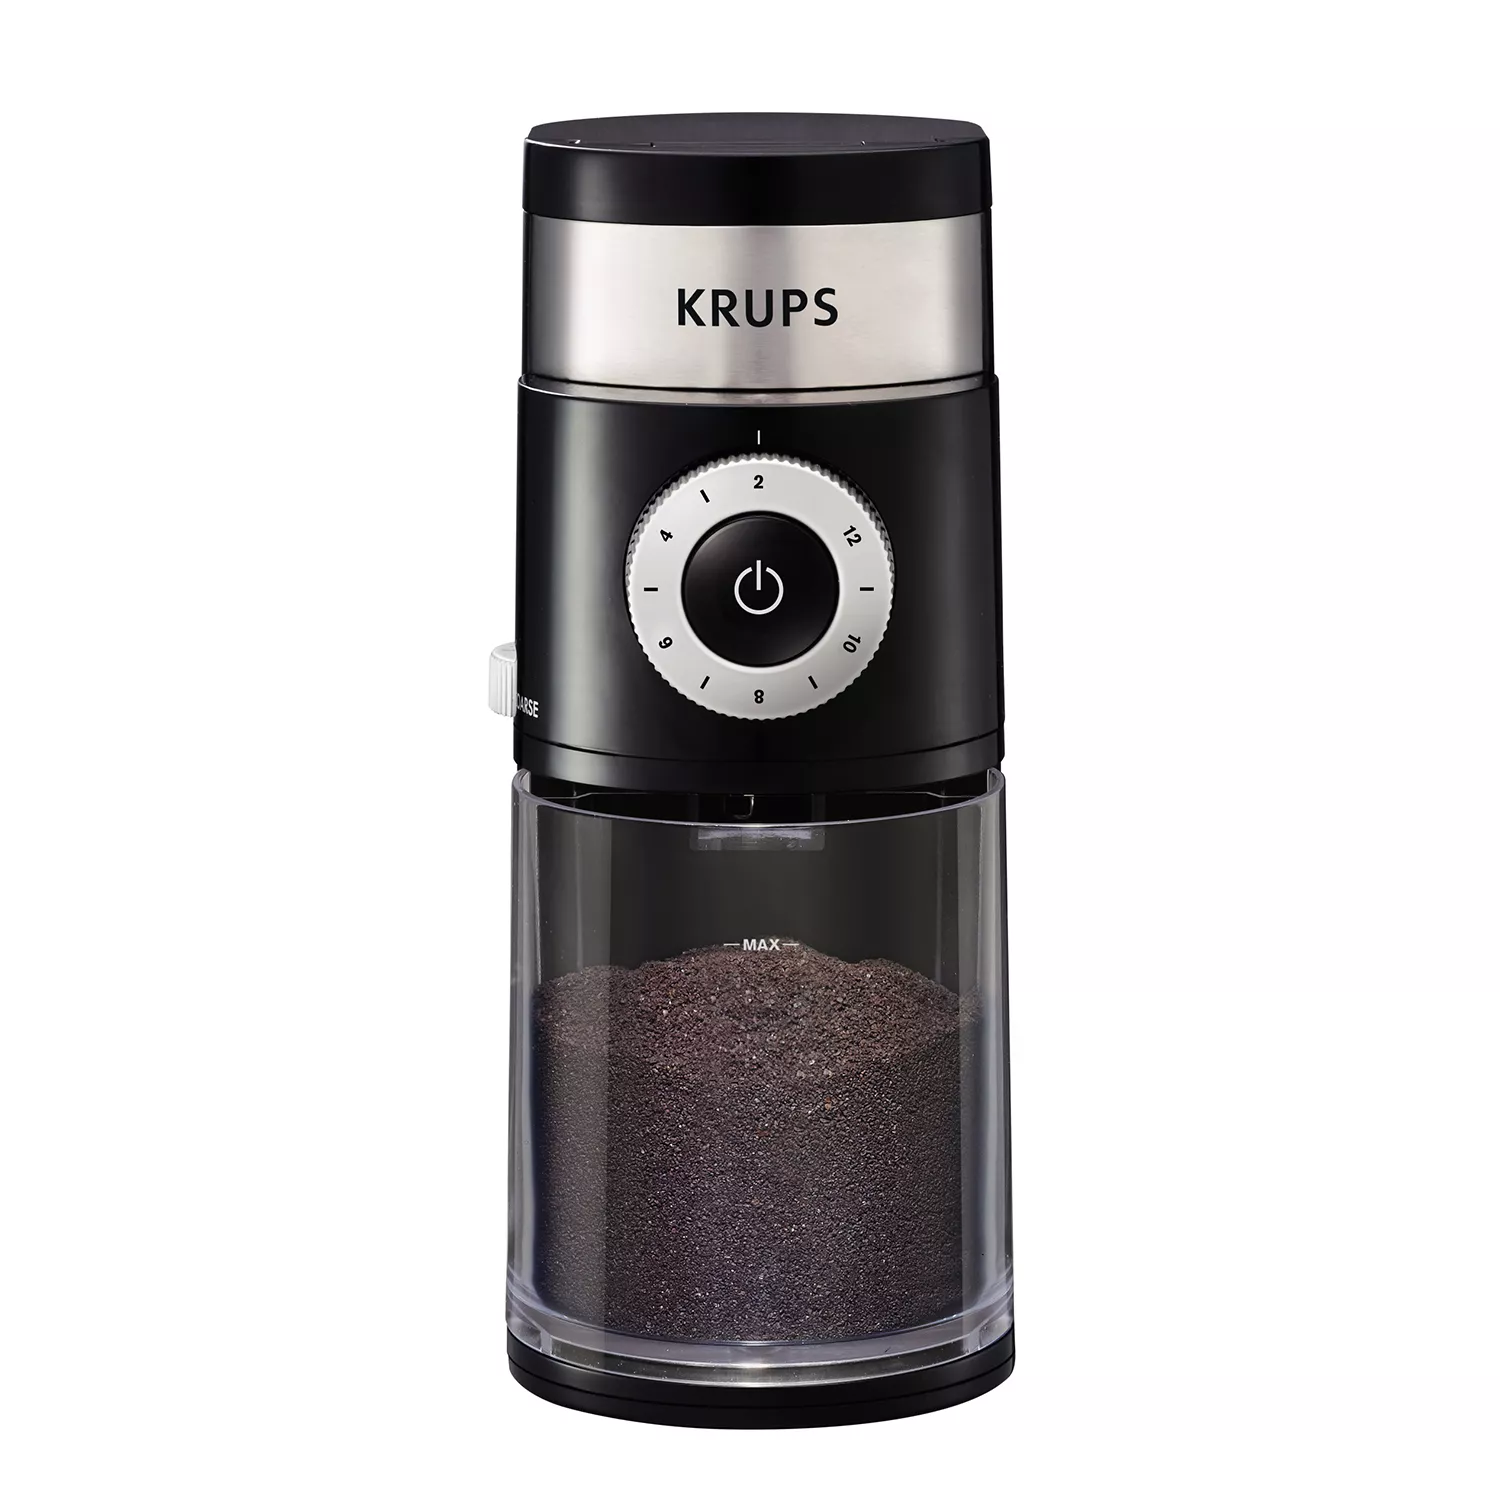 Coffee Grinder GX5000, Breakfast Appliances